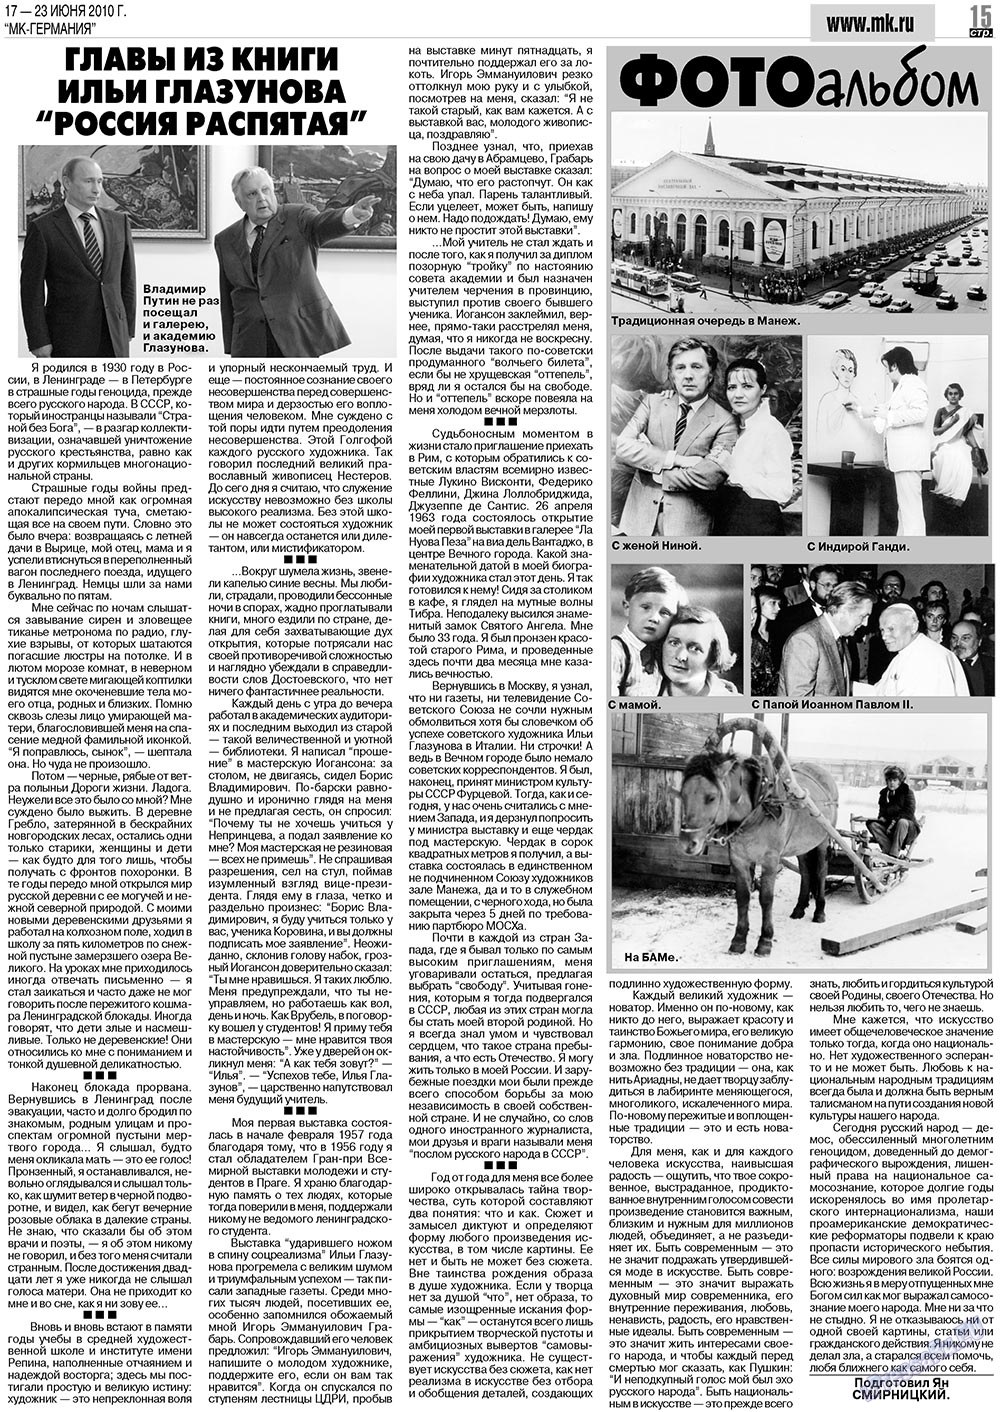 МК-Германия, газета. 2010 №25 стр.15